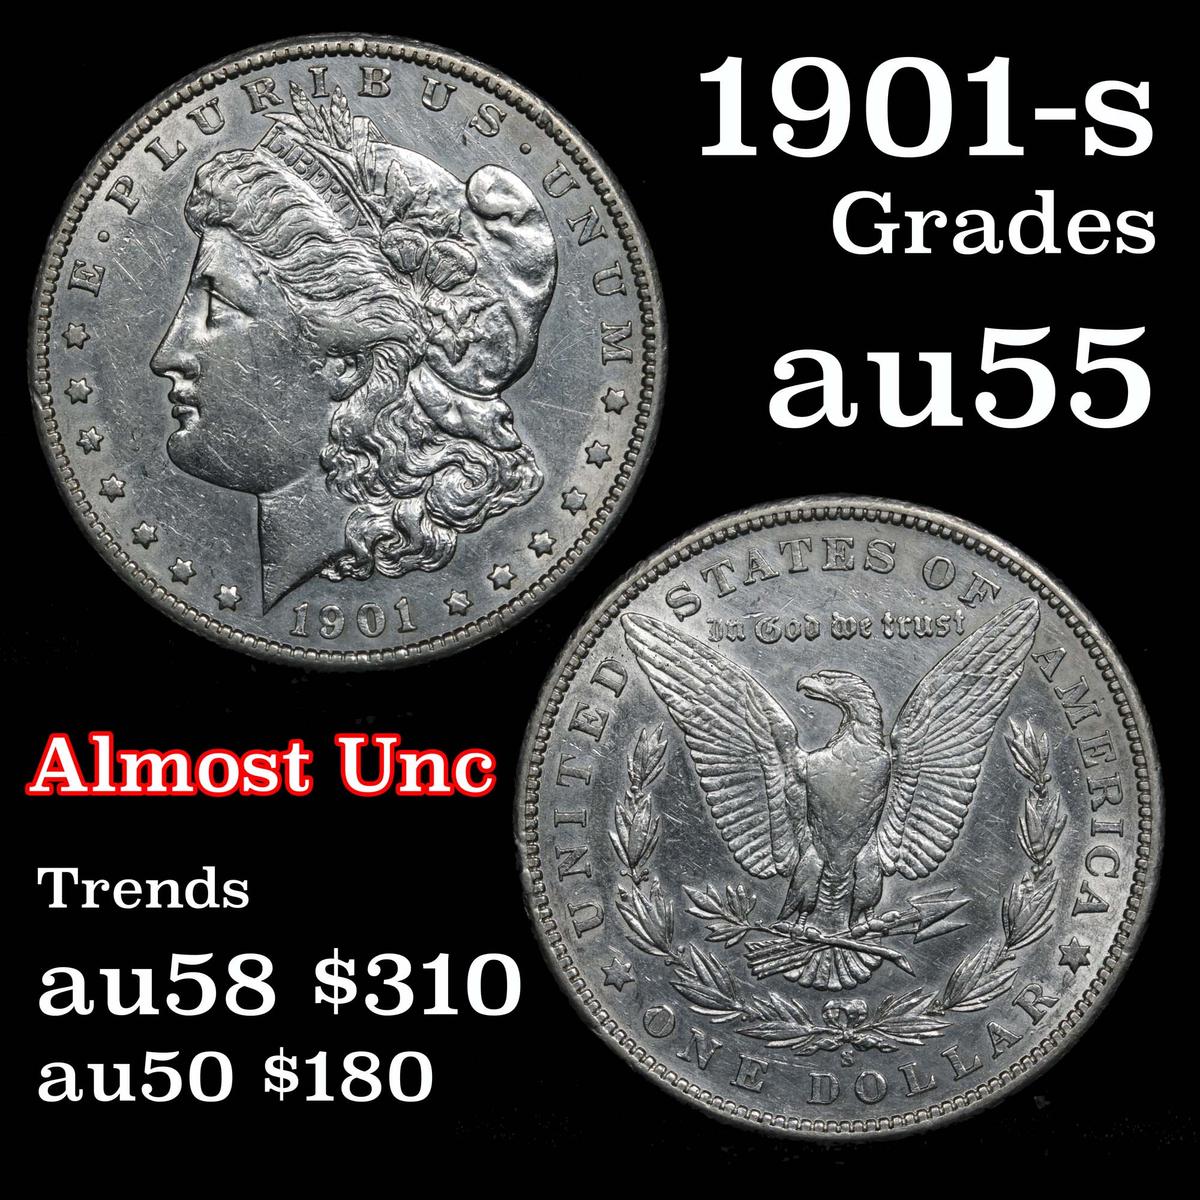 1901-s Morgan Dollar $1 Grades Choice AU